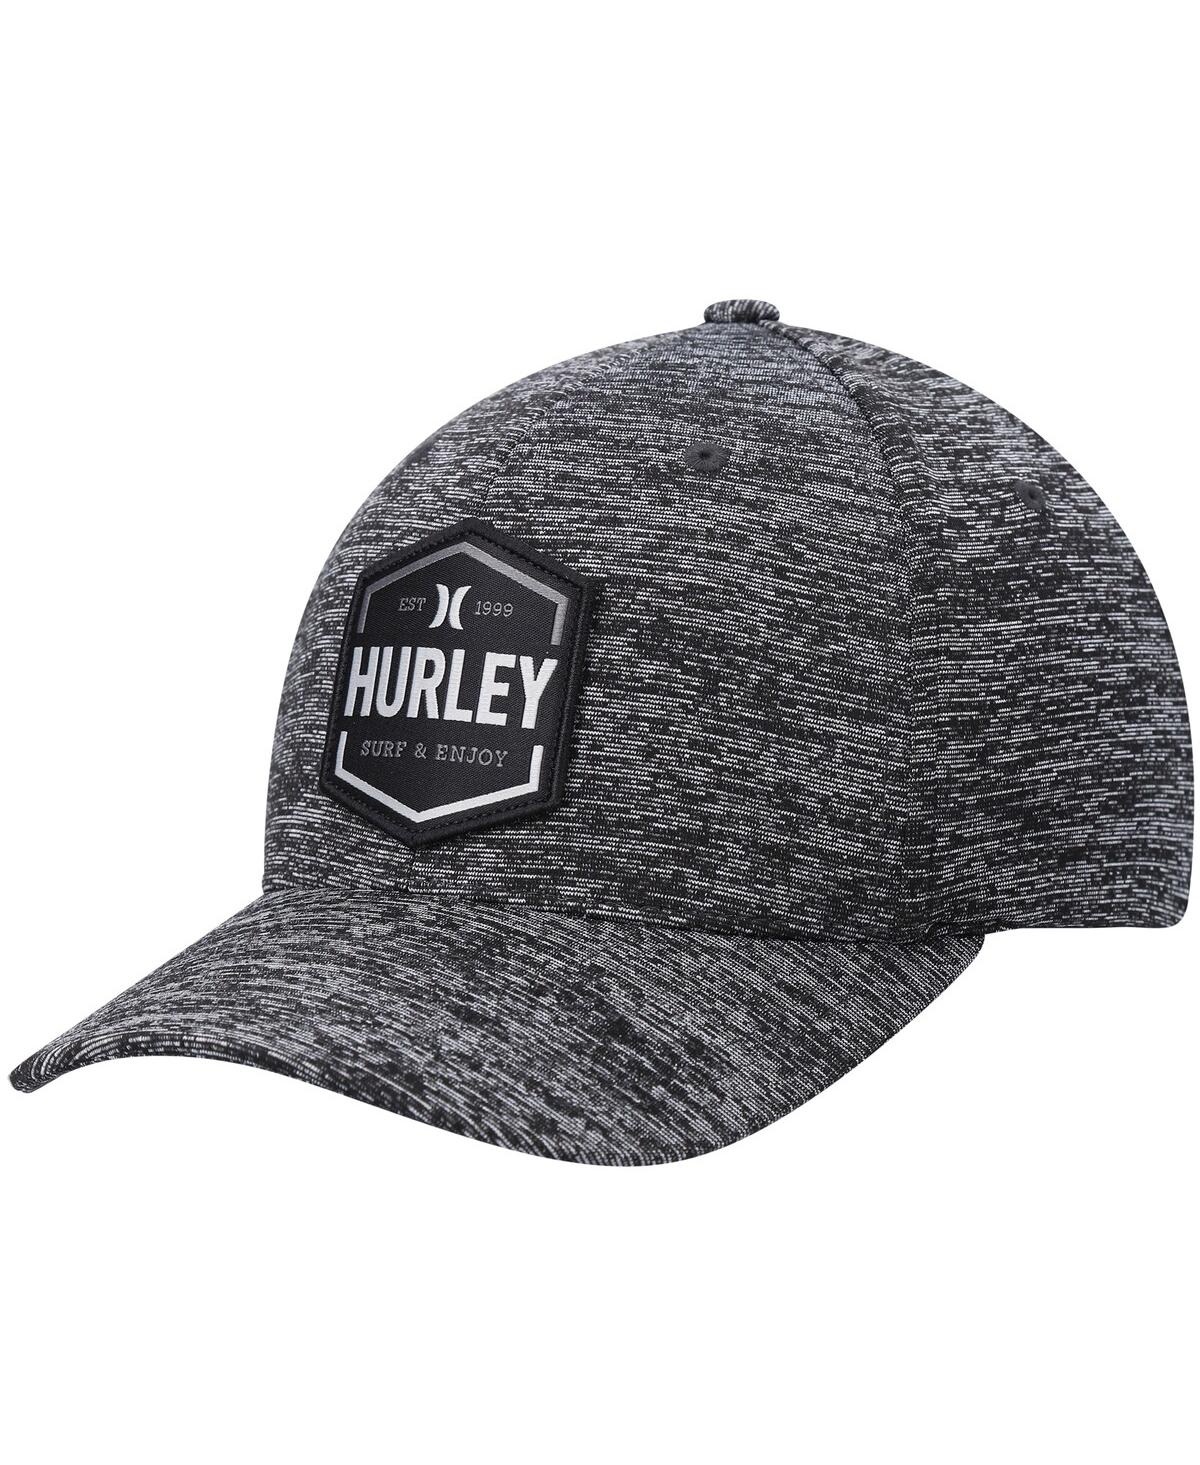 Men's Hurley Black Wilson Flex Hat - Black